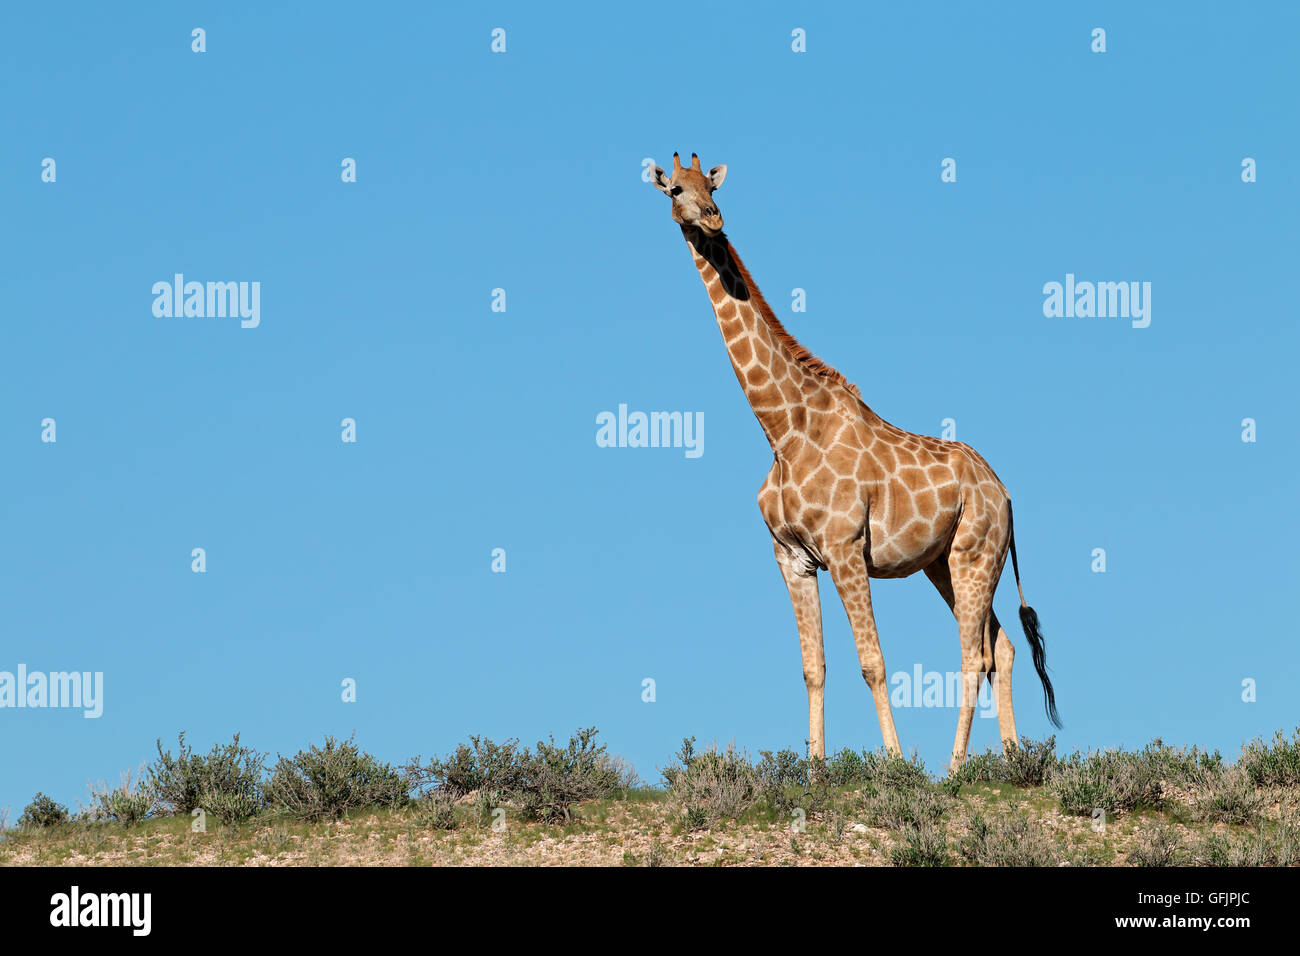 A giraffe (Giraffa camelopardalis) against a blue sky, Kalahari desert, South Africa Stock Photo